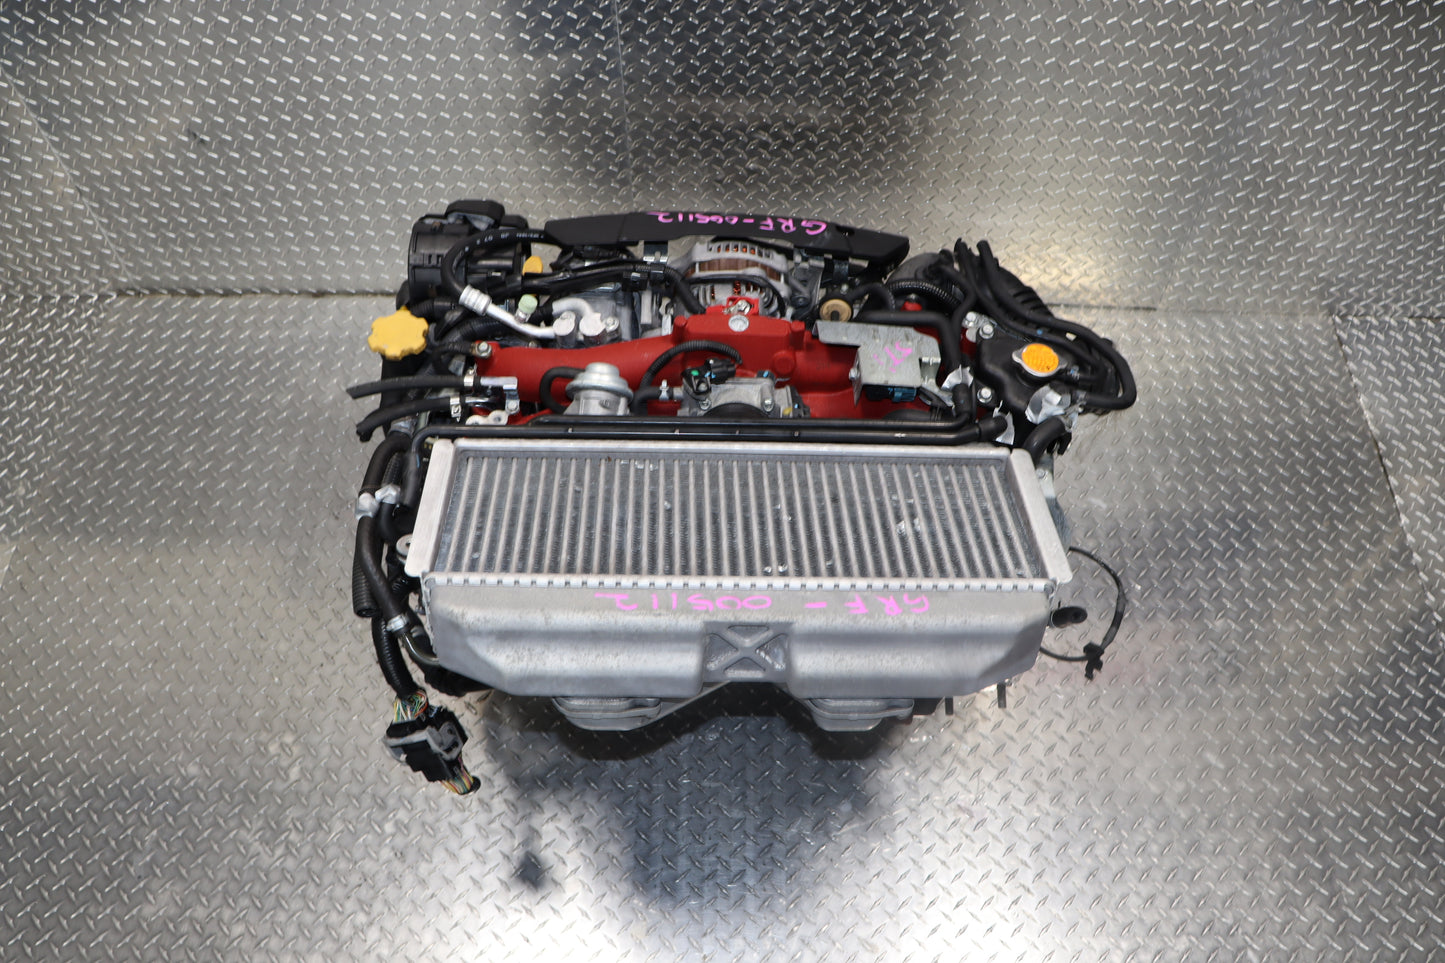 JDM EJ257 MOTOR 2015 - 2019 SUBARU WRX STI V10 AVCS TURBO BOXER ENGINE IMPORTED